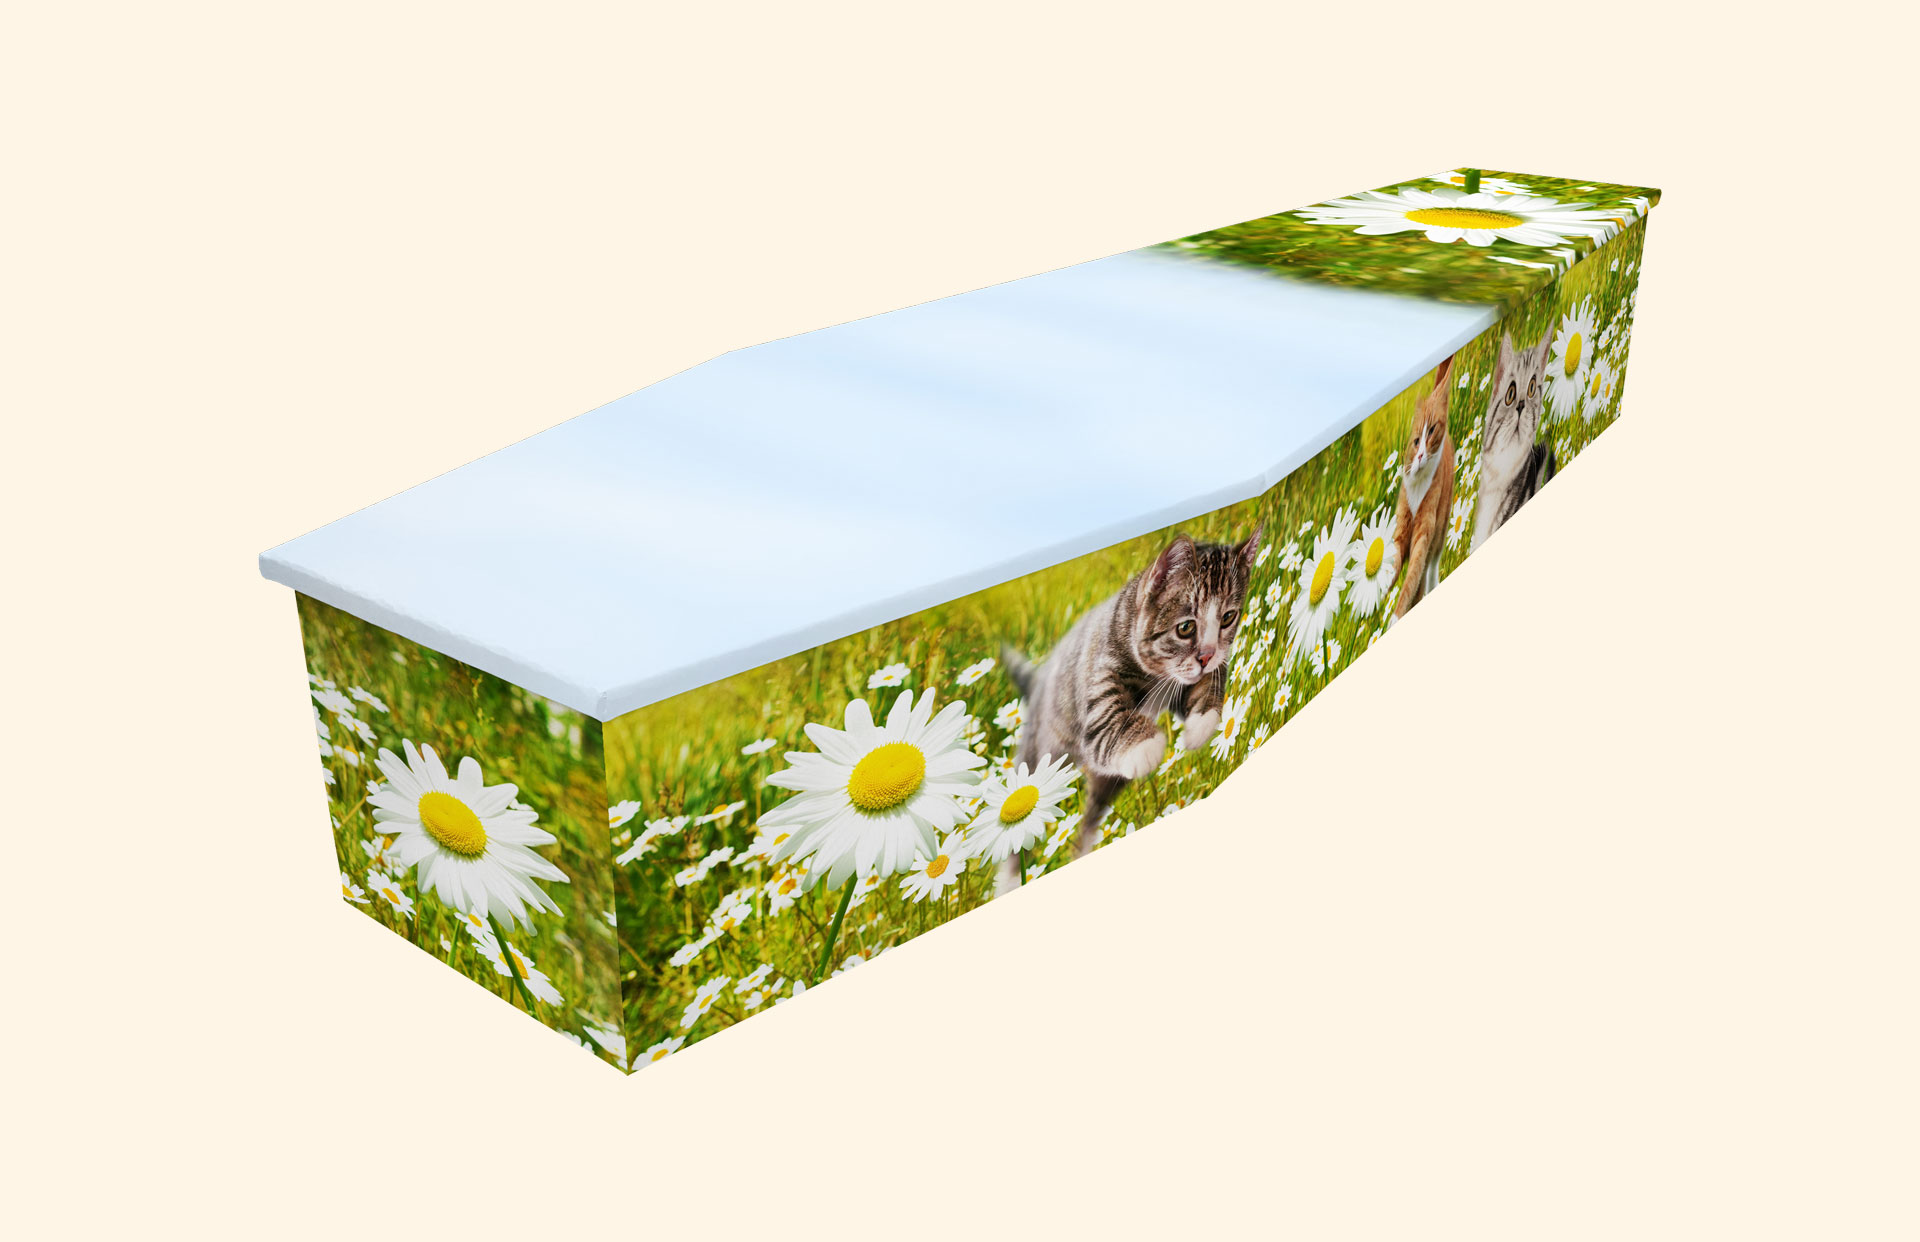 Purrfect Daisy design on a cardboard coffin